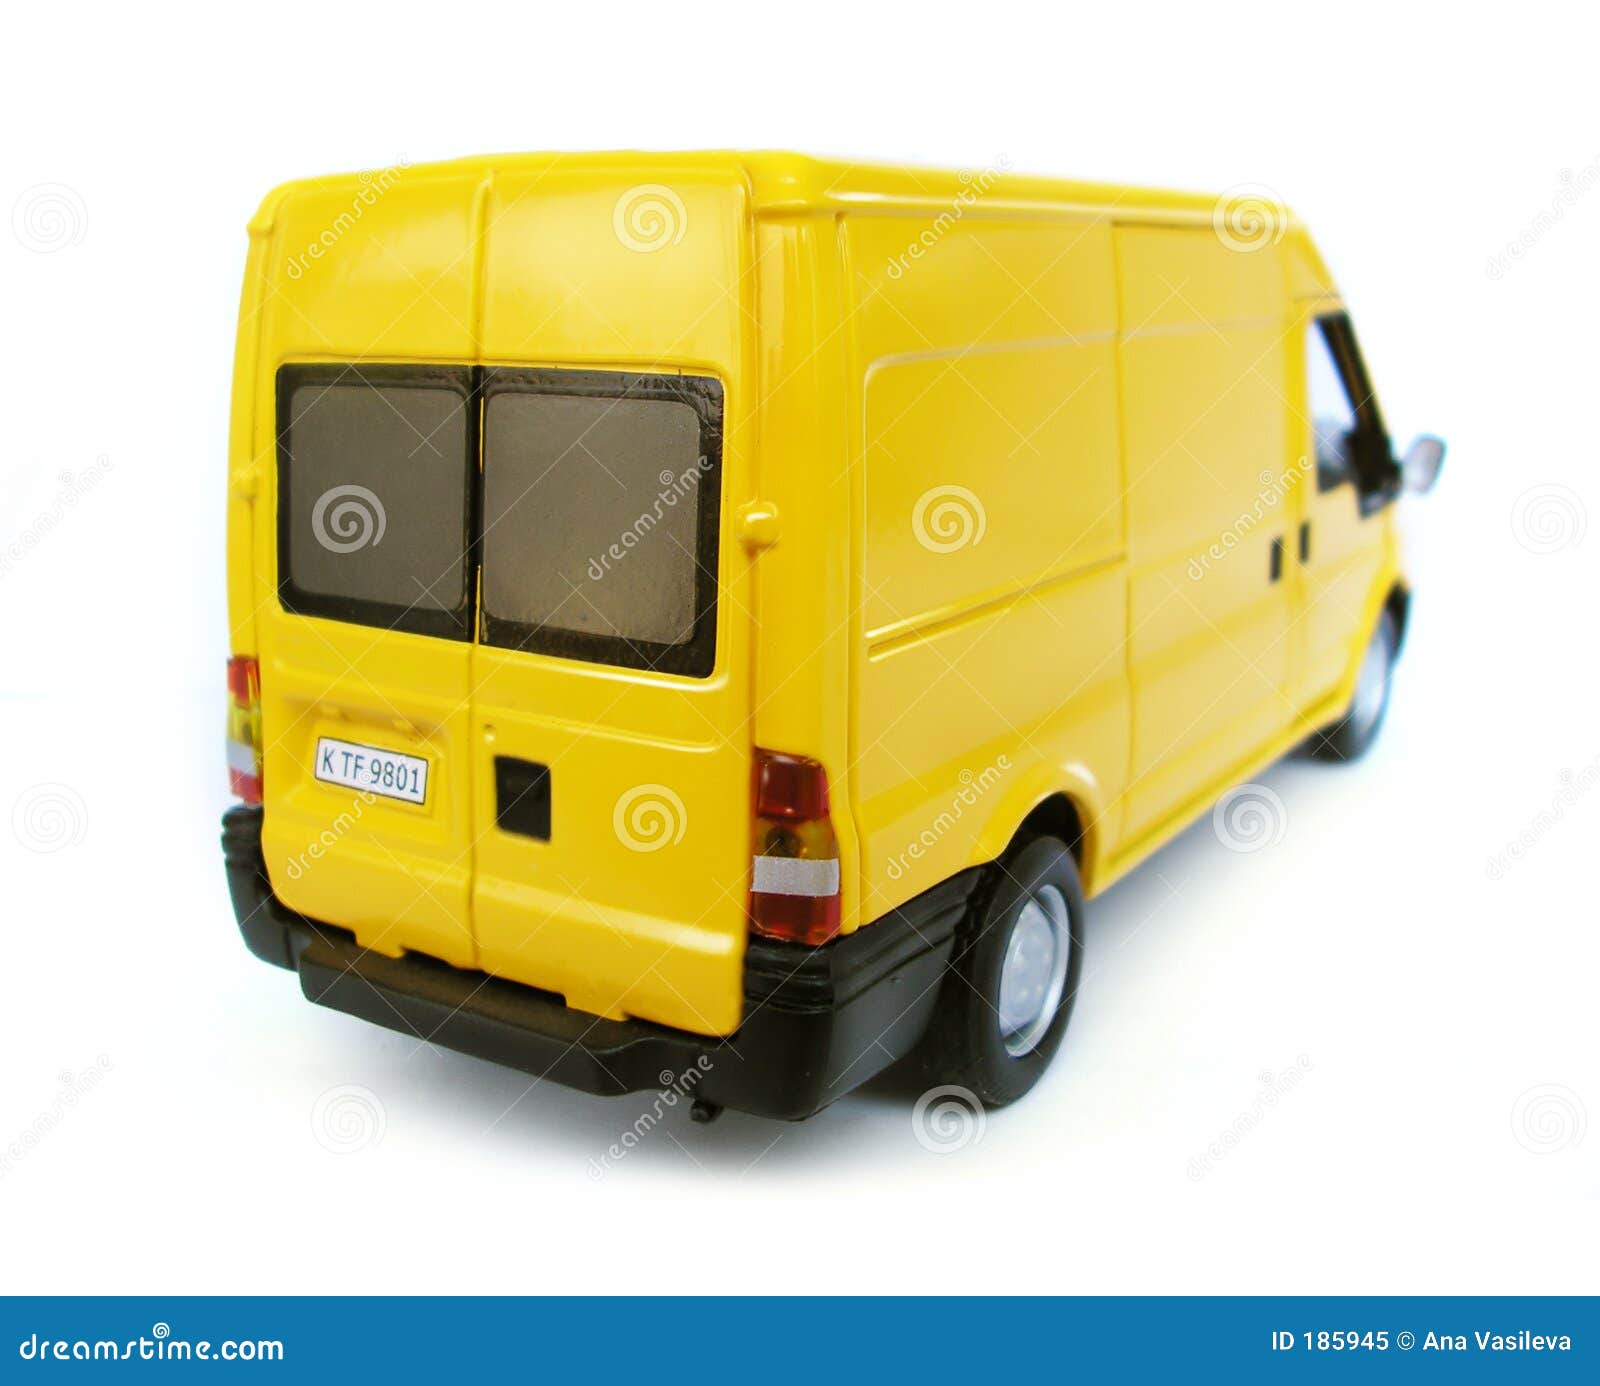 yellow model car - van. hobby, collection